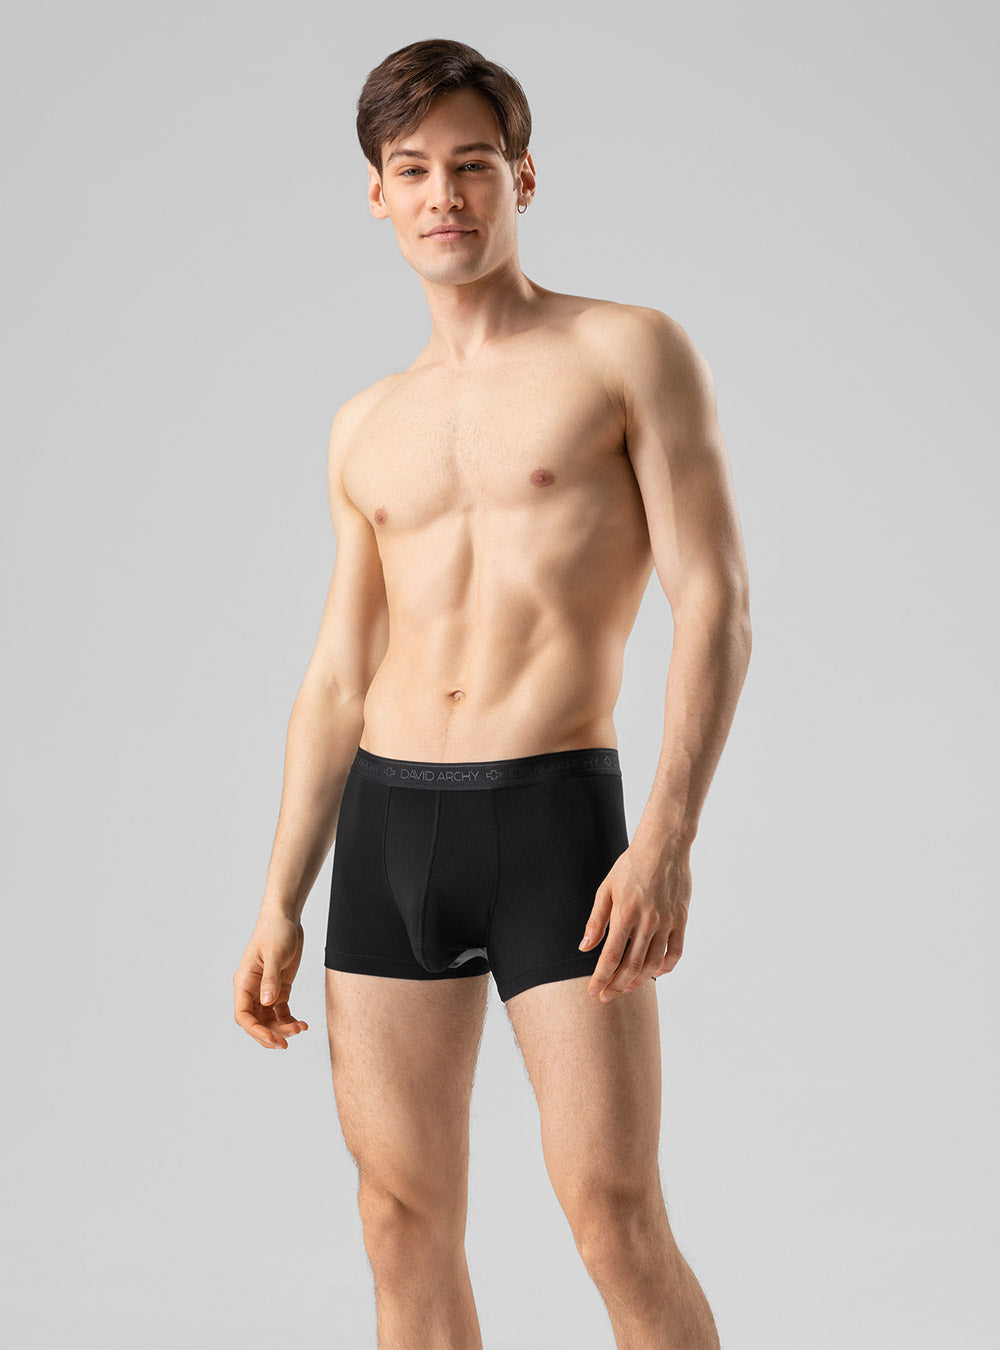 David Archy Mens Underwear Contoured Bulge Pouch Bikini Briefs